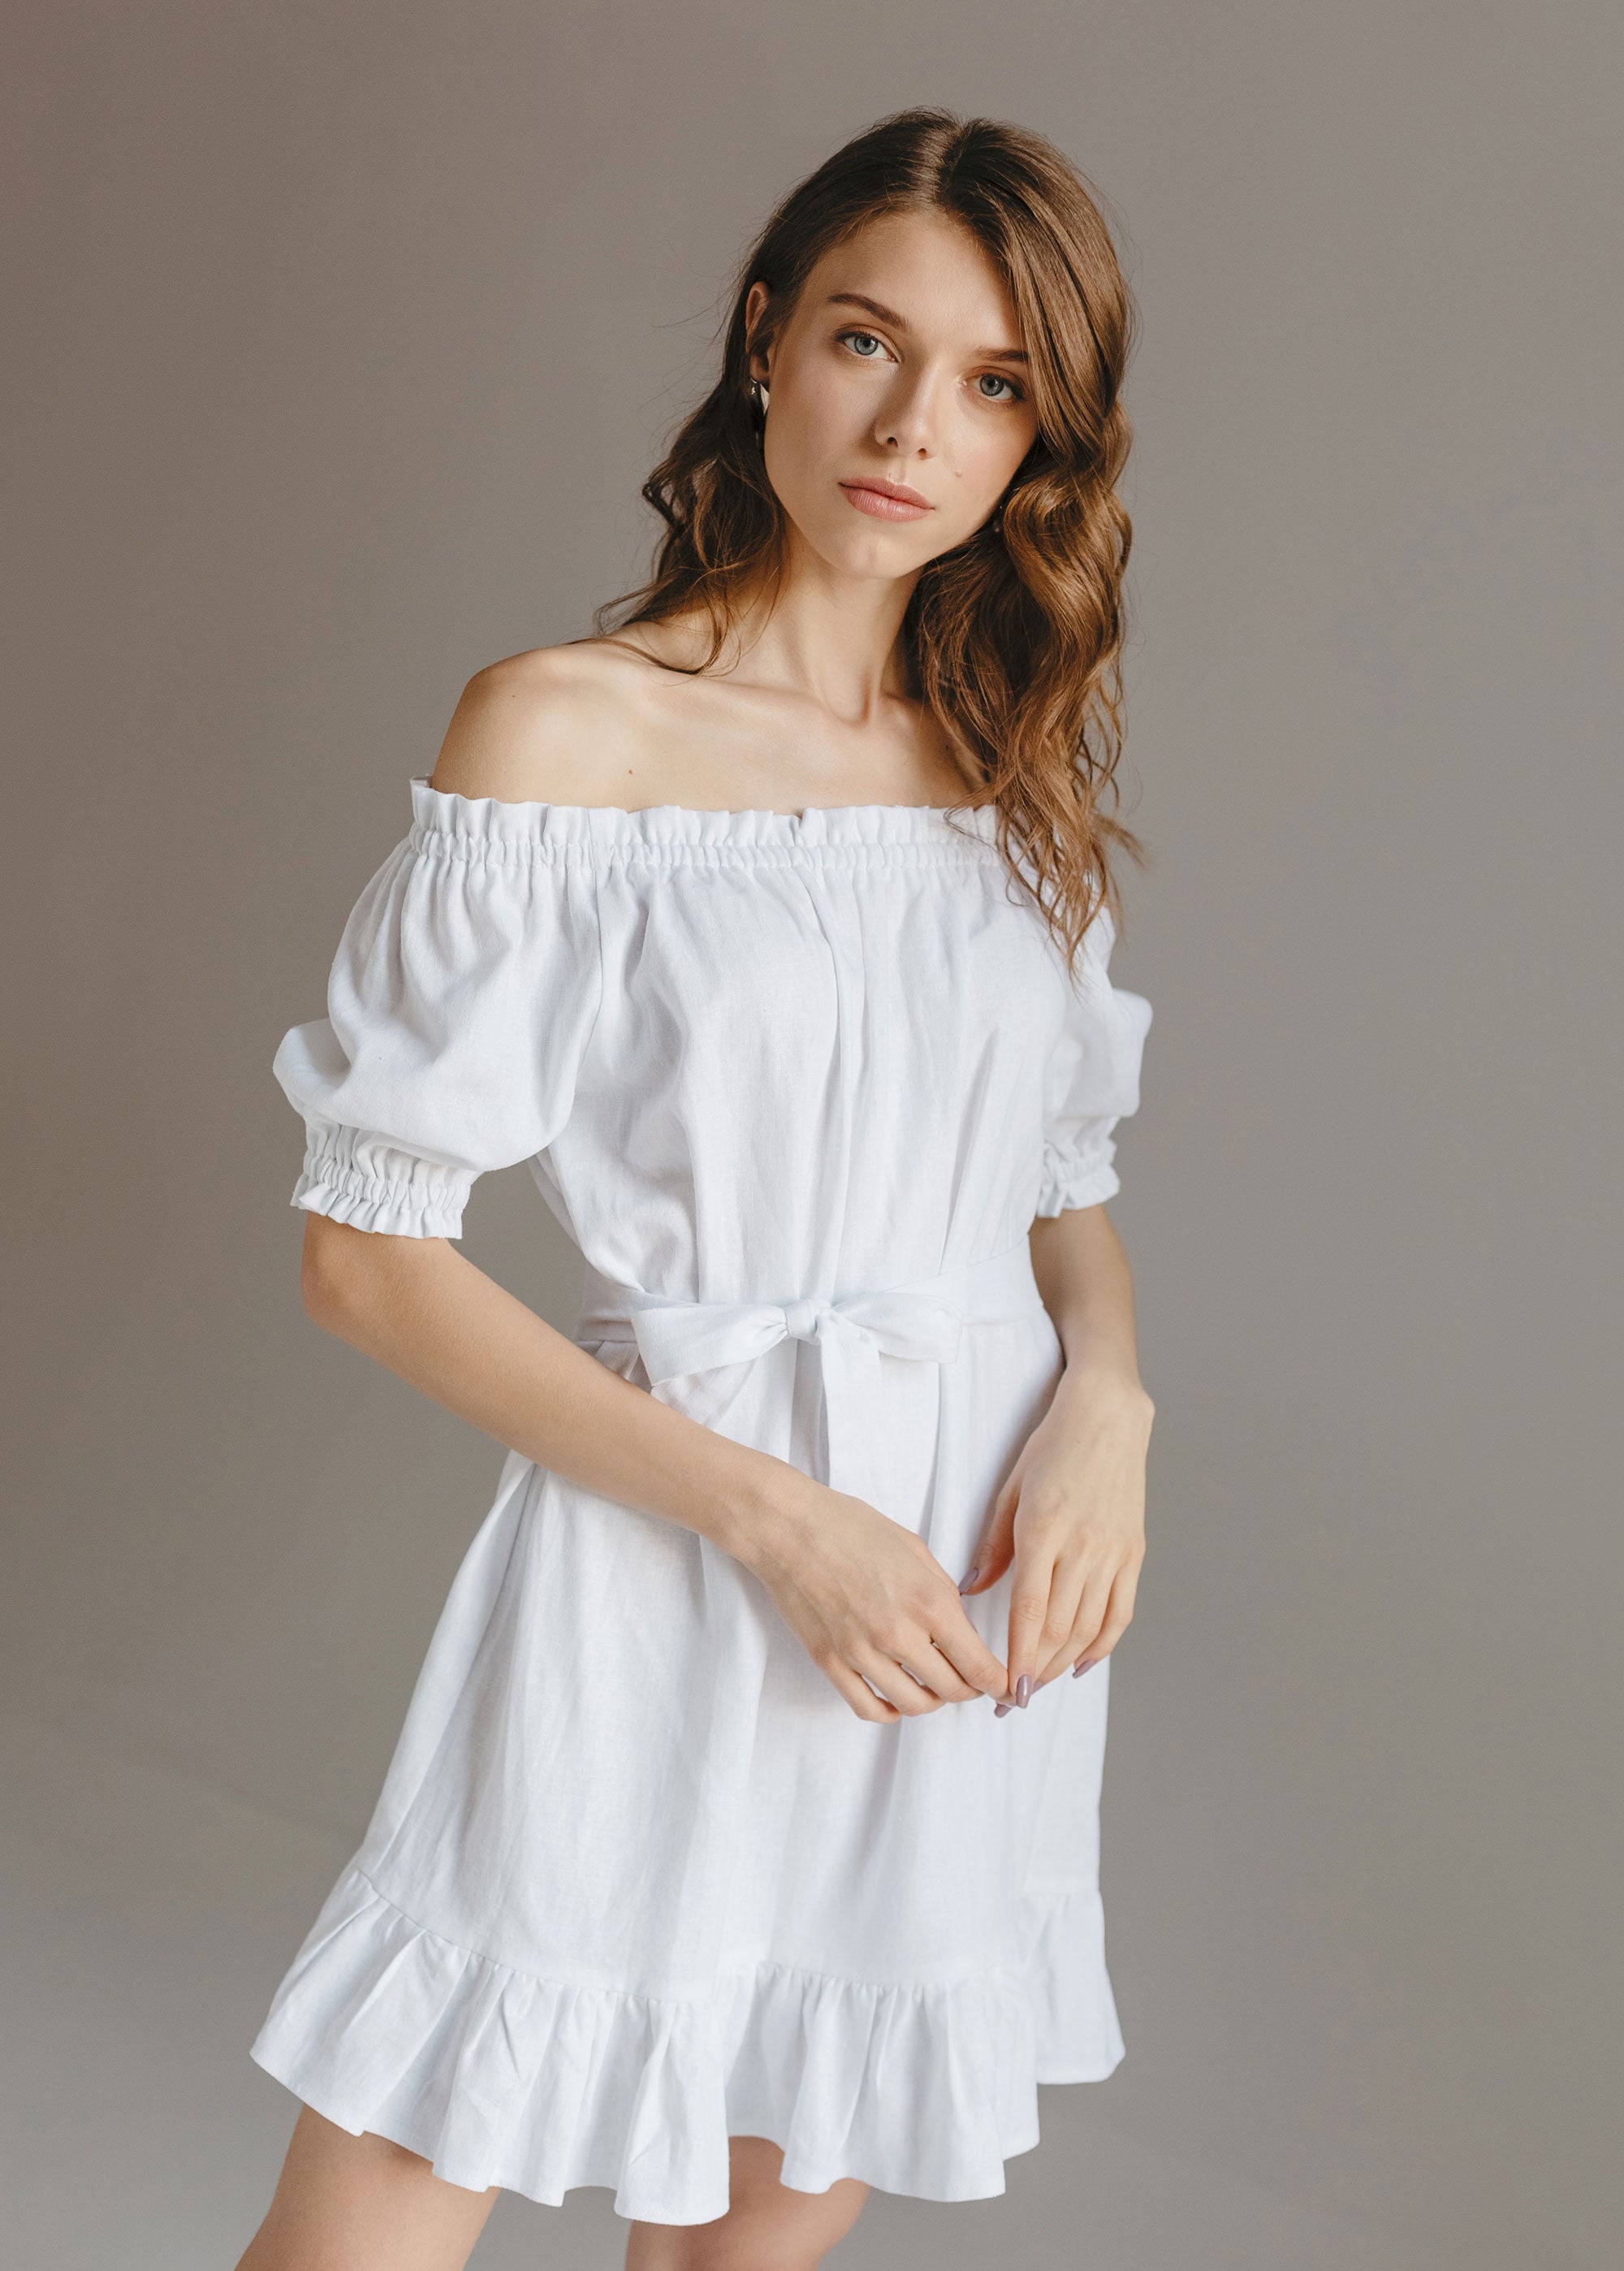 "Lia" kurzes weißes schulterfreies Kleid